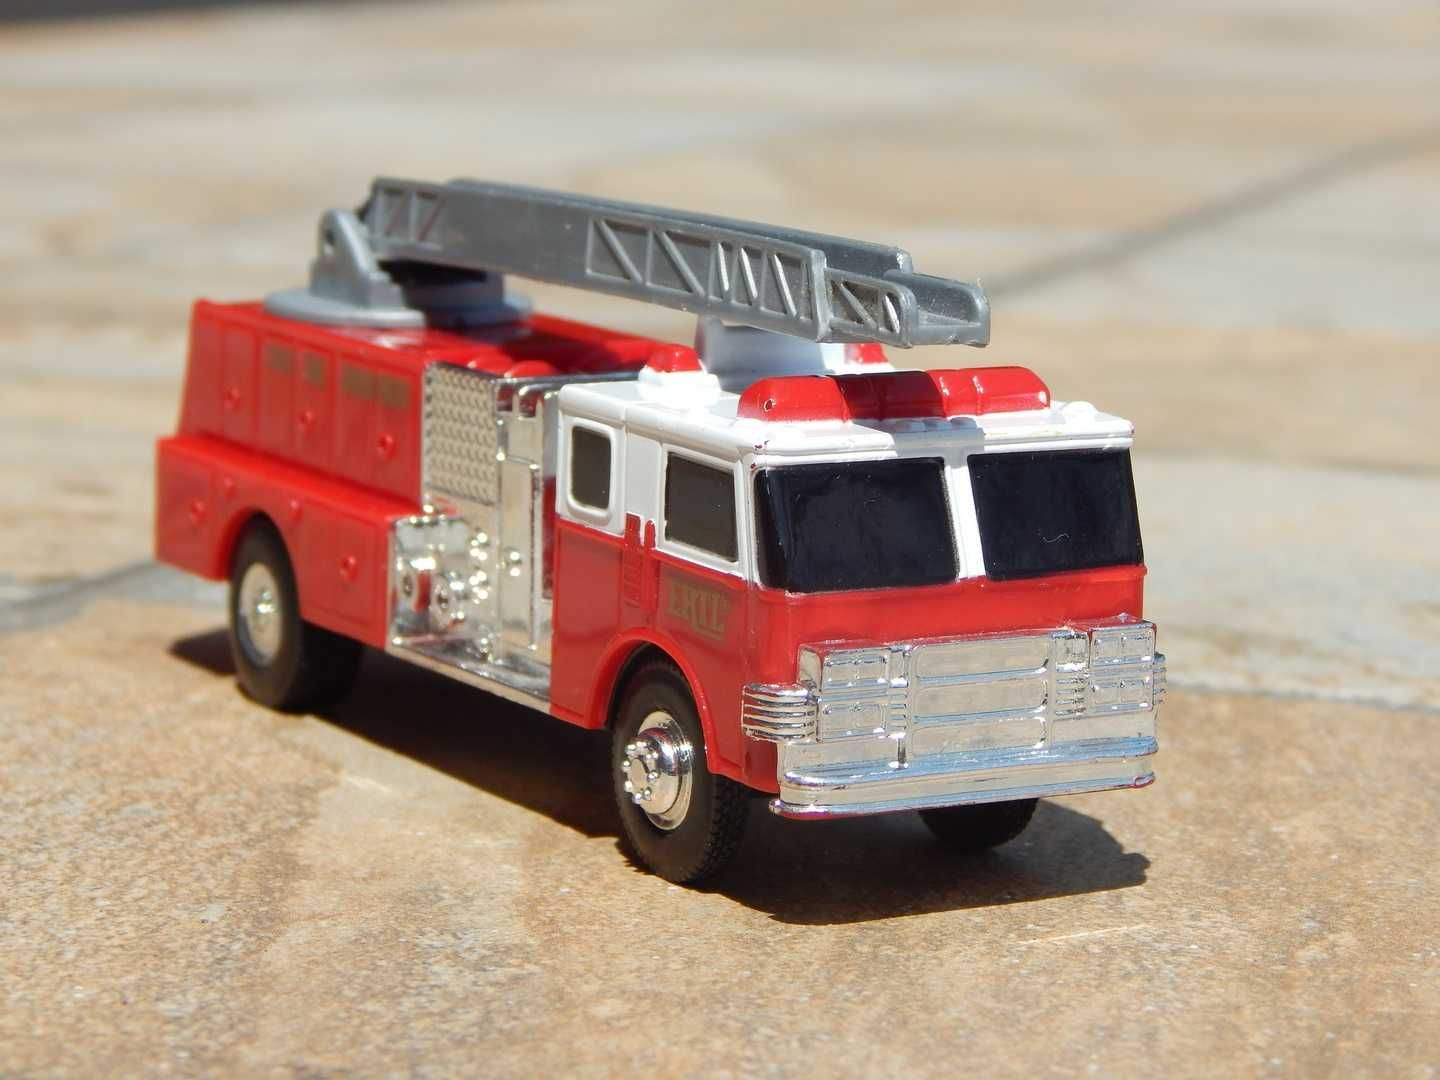 Macheta masina pompieri americana ERTL N Play sc 1:50 cu scara mobila